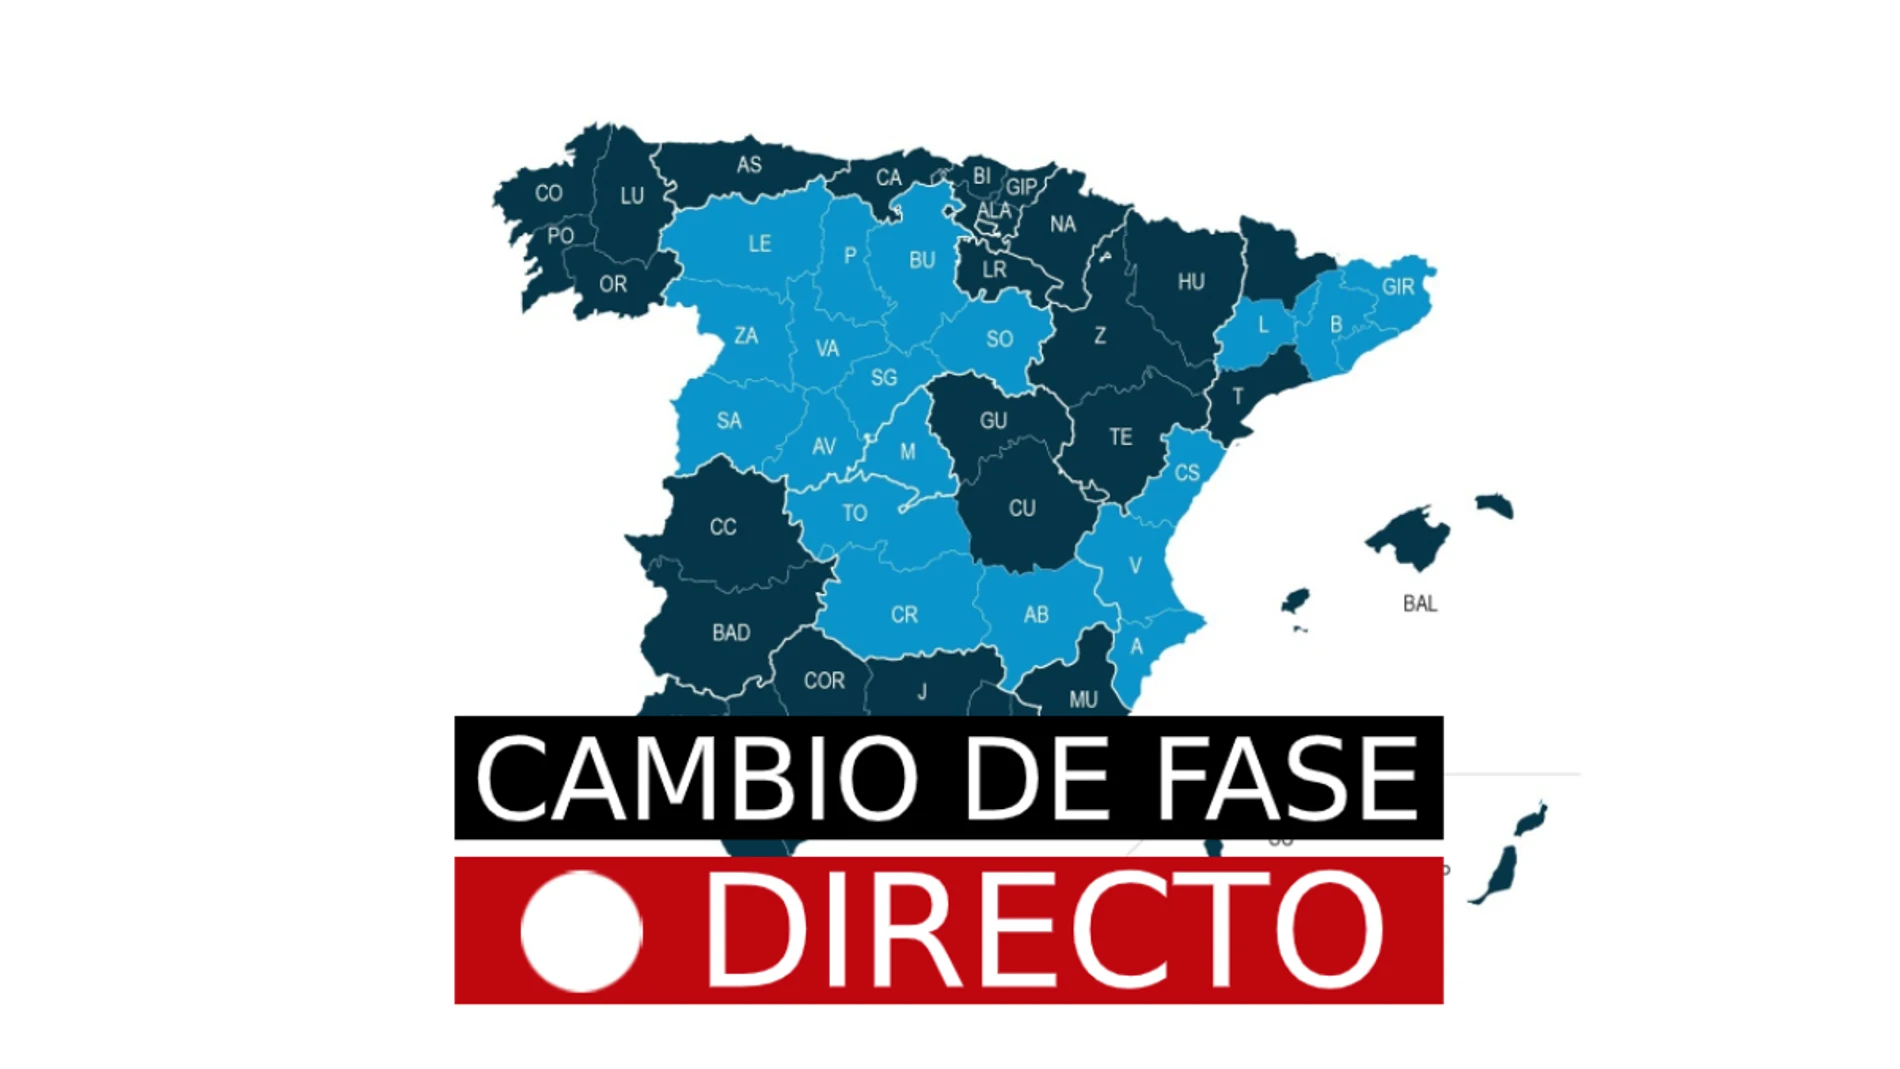 Cambio de fase por desescalada de coronavirus en España, hoy | Fase 1, 2 y 3, última hora en directo